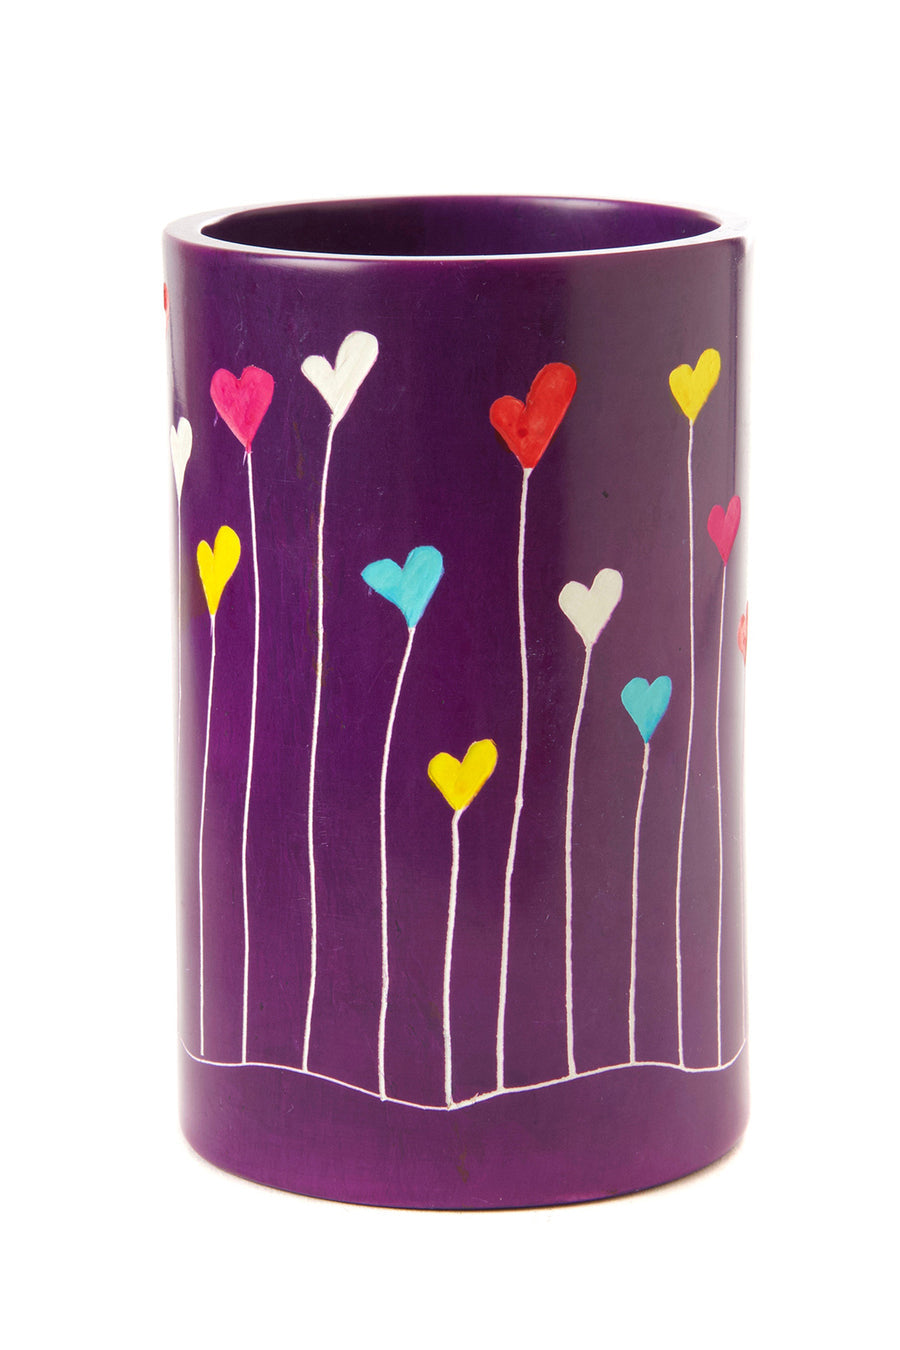 Dreamland Soapstone Pen Cup Vase in Purple - Culture Kraze Marketplace.com